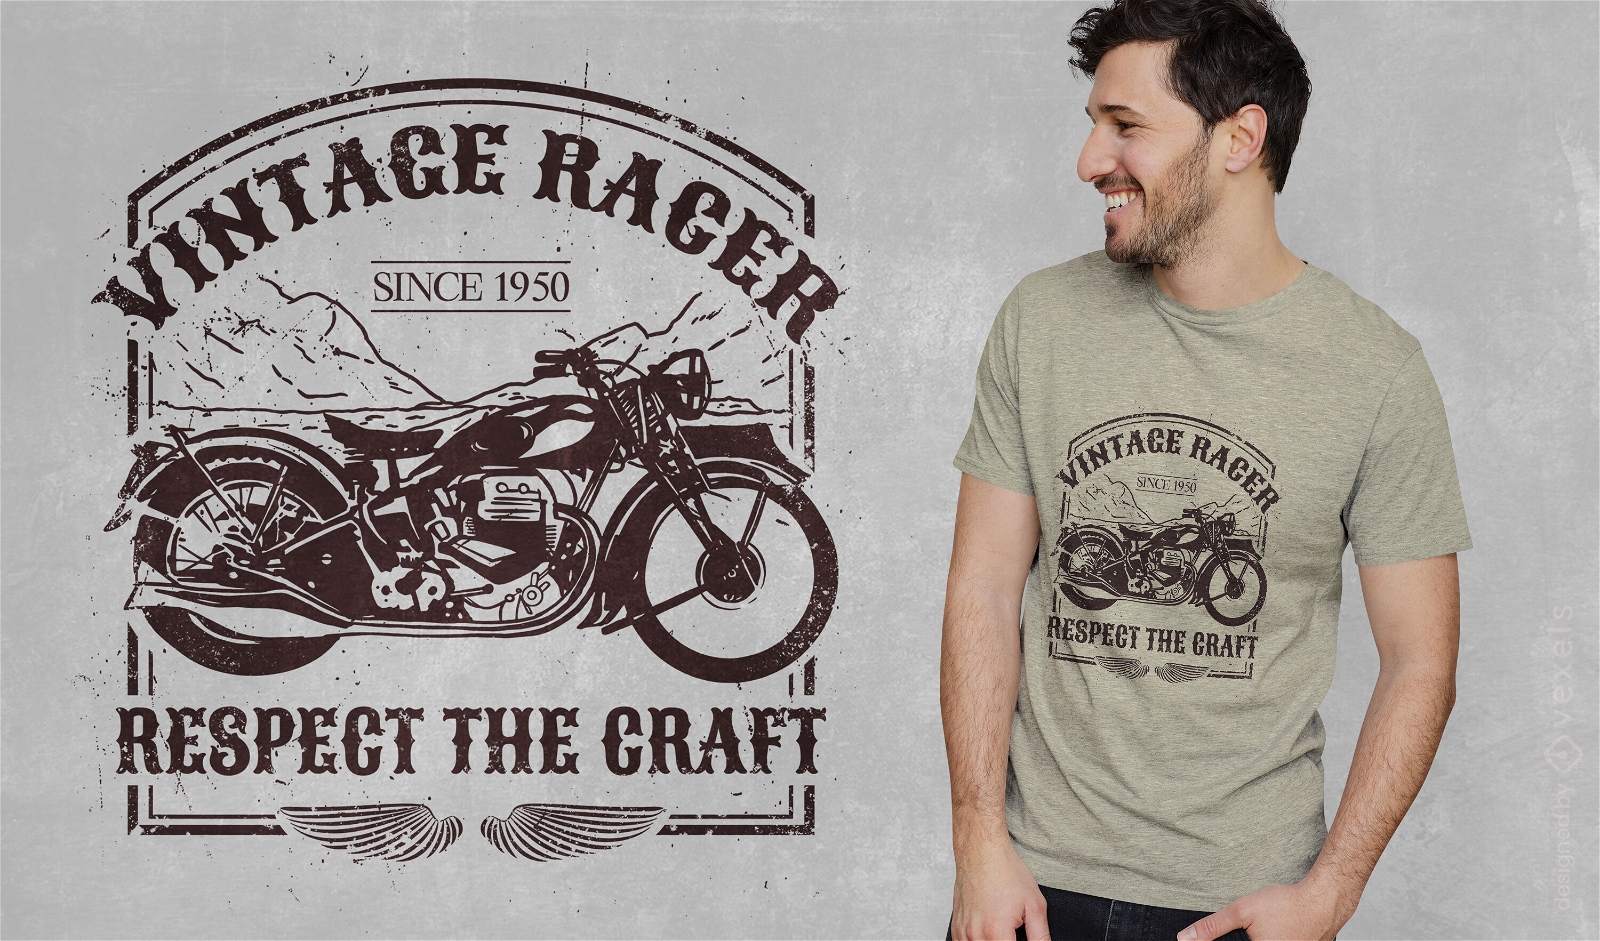 Vintage motorcycle badge t-shirt design